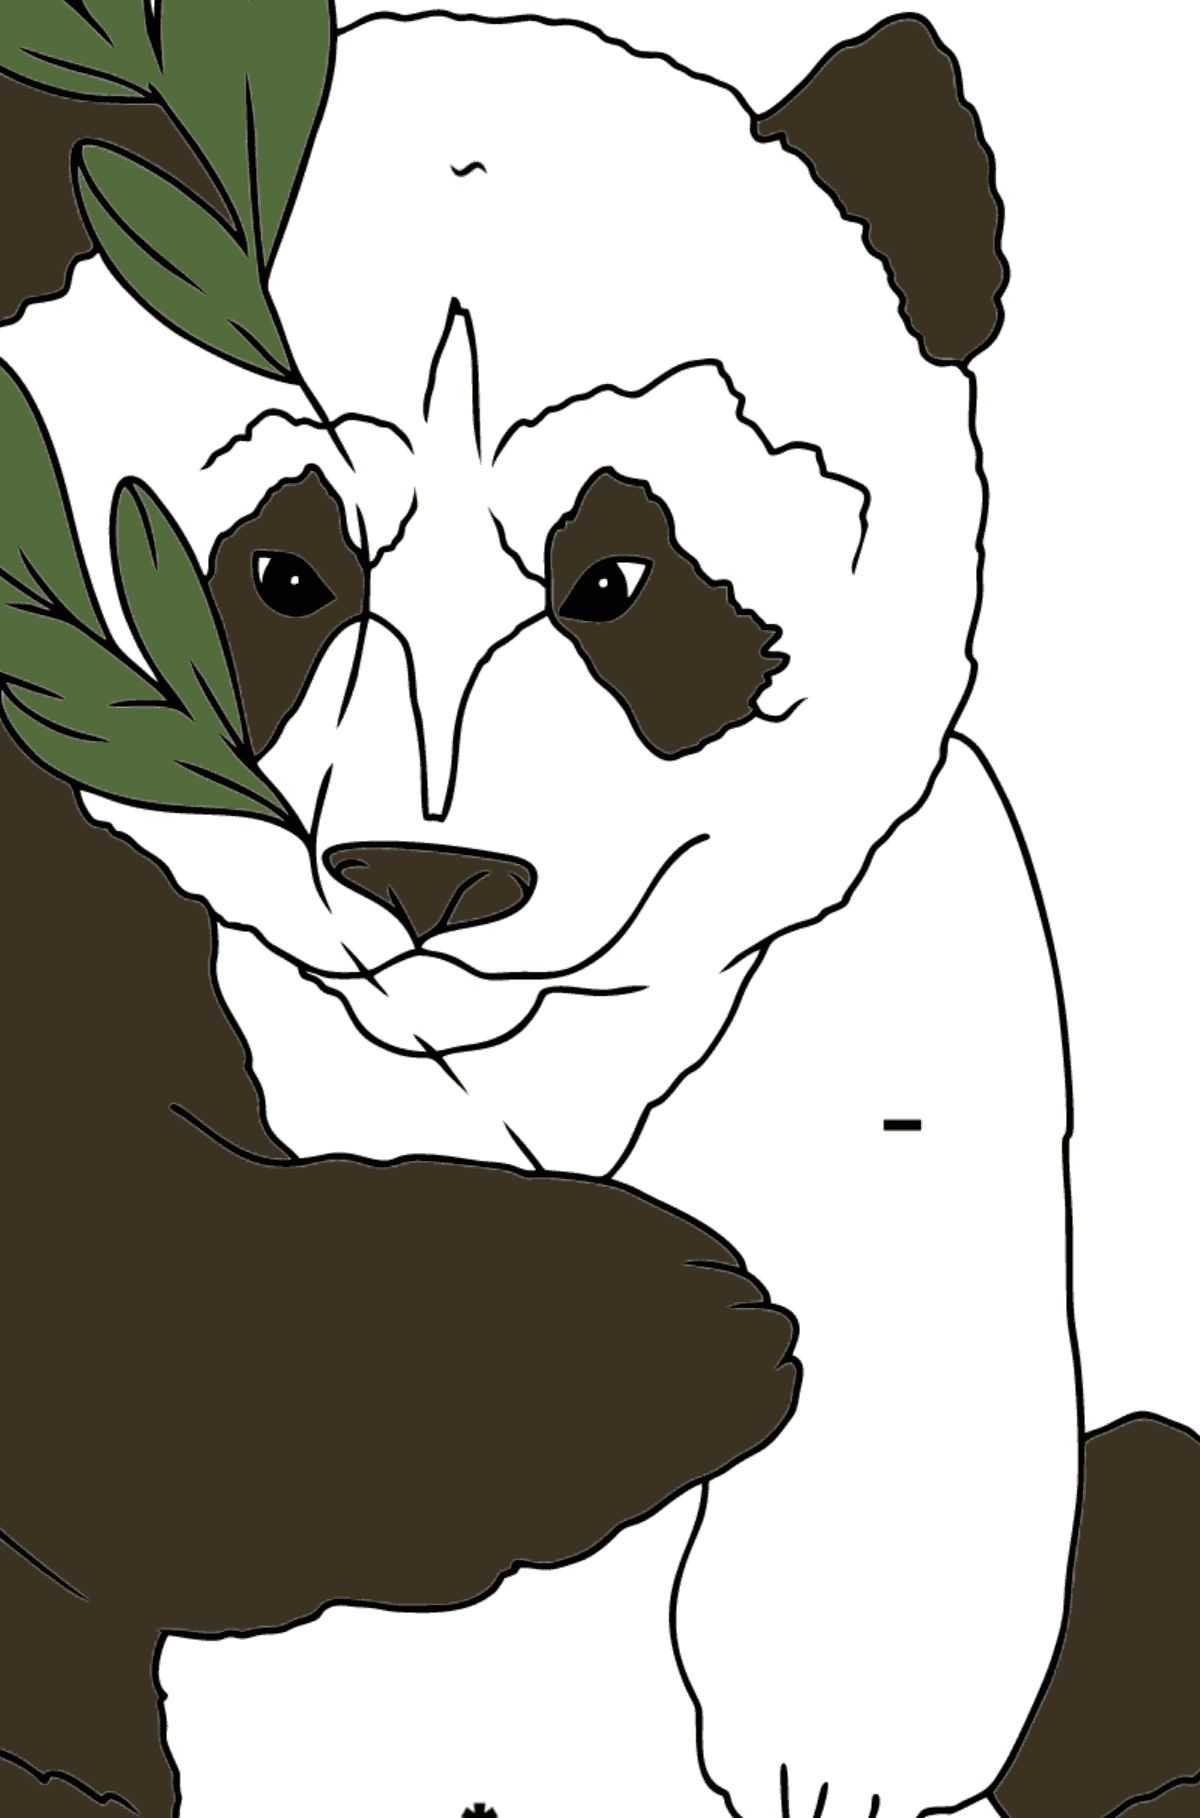 Dibujo para Colorear - Un Panda Abrazando Hojas de Bambú - Colorear por Símbolos para Niños